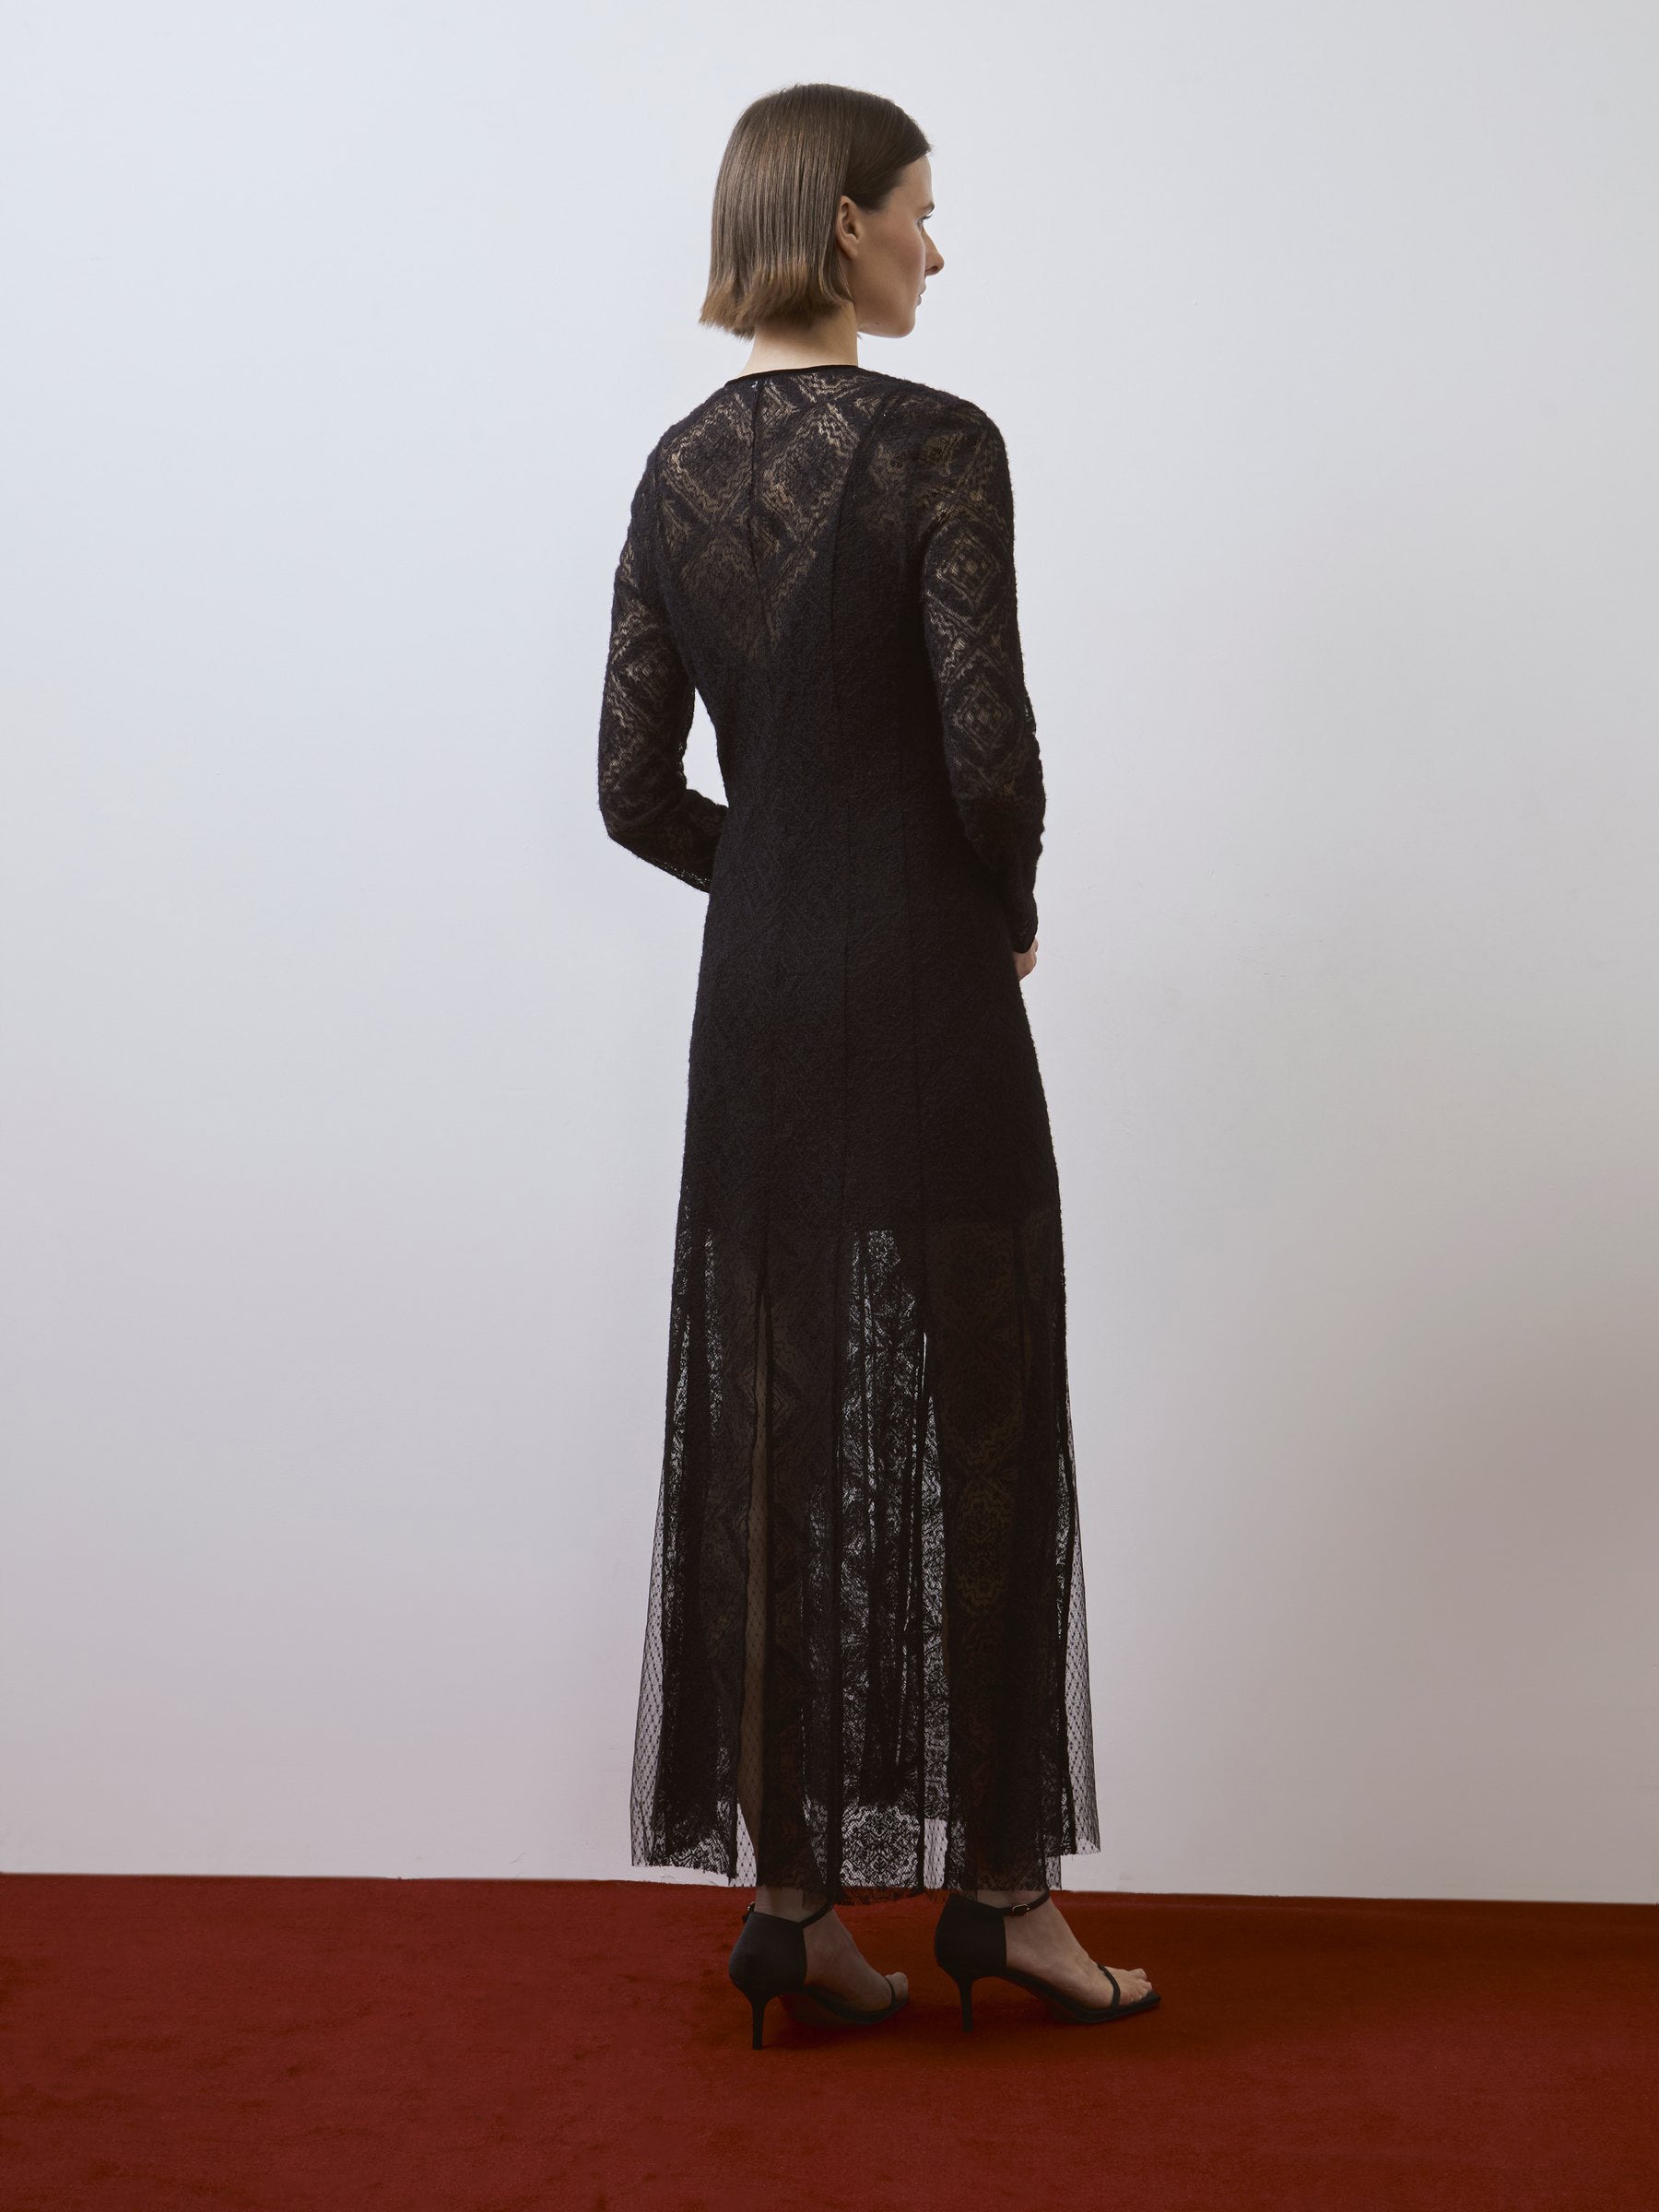 Panelled lace dress